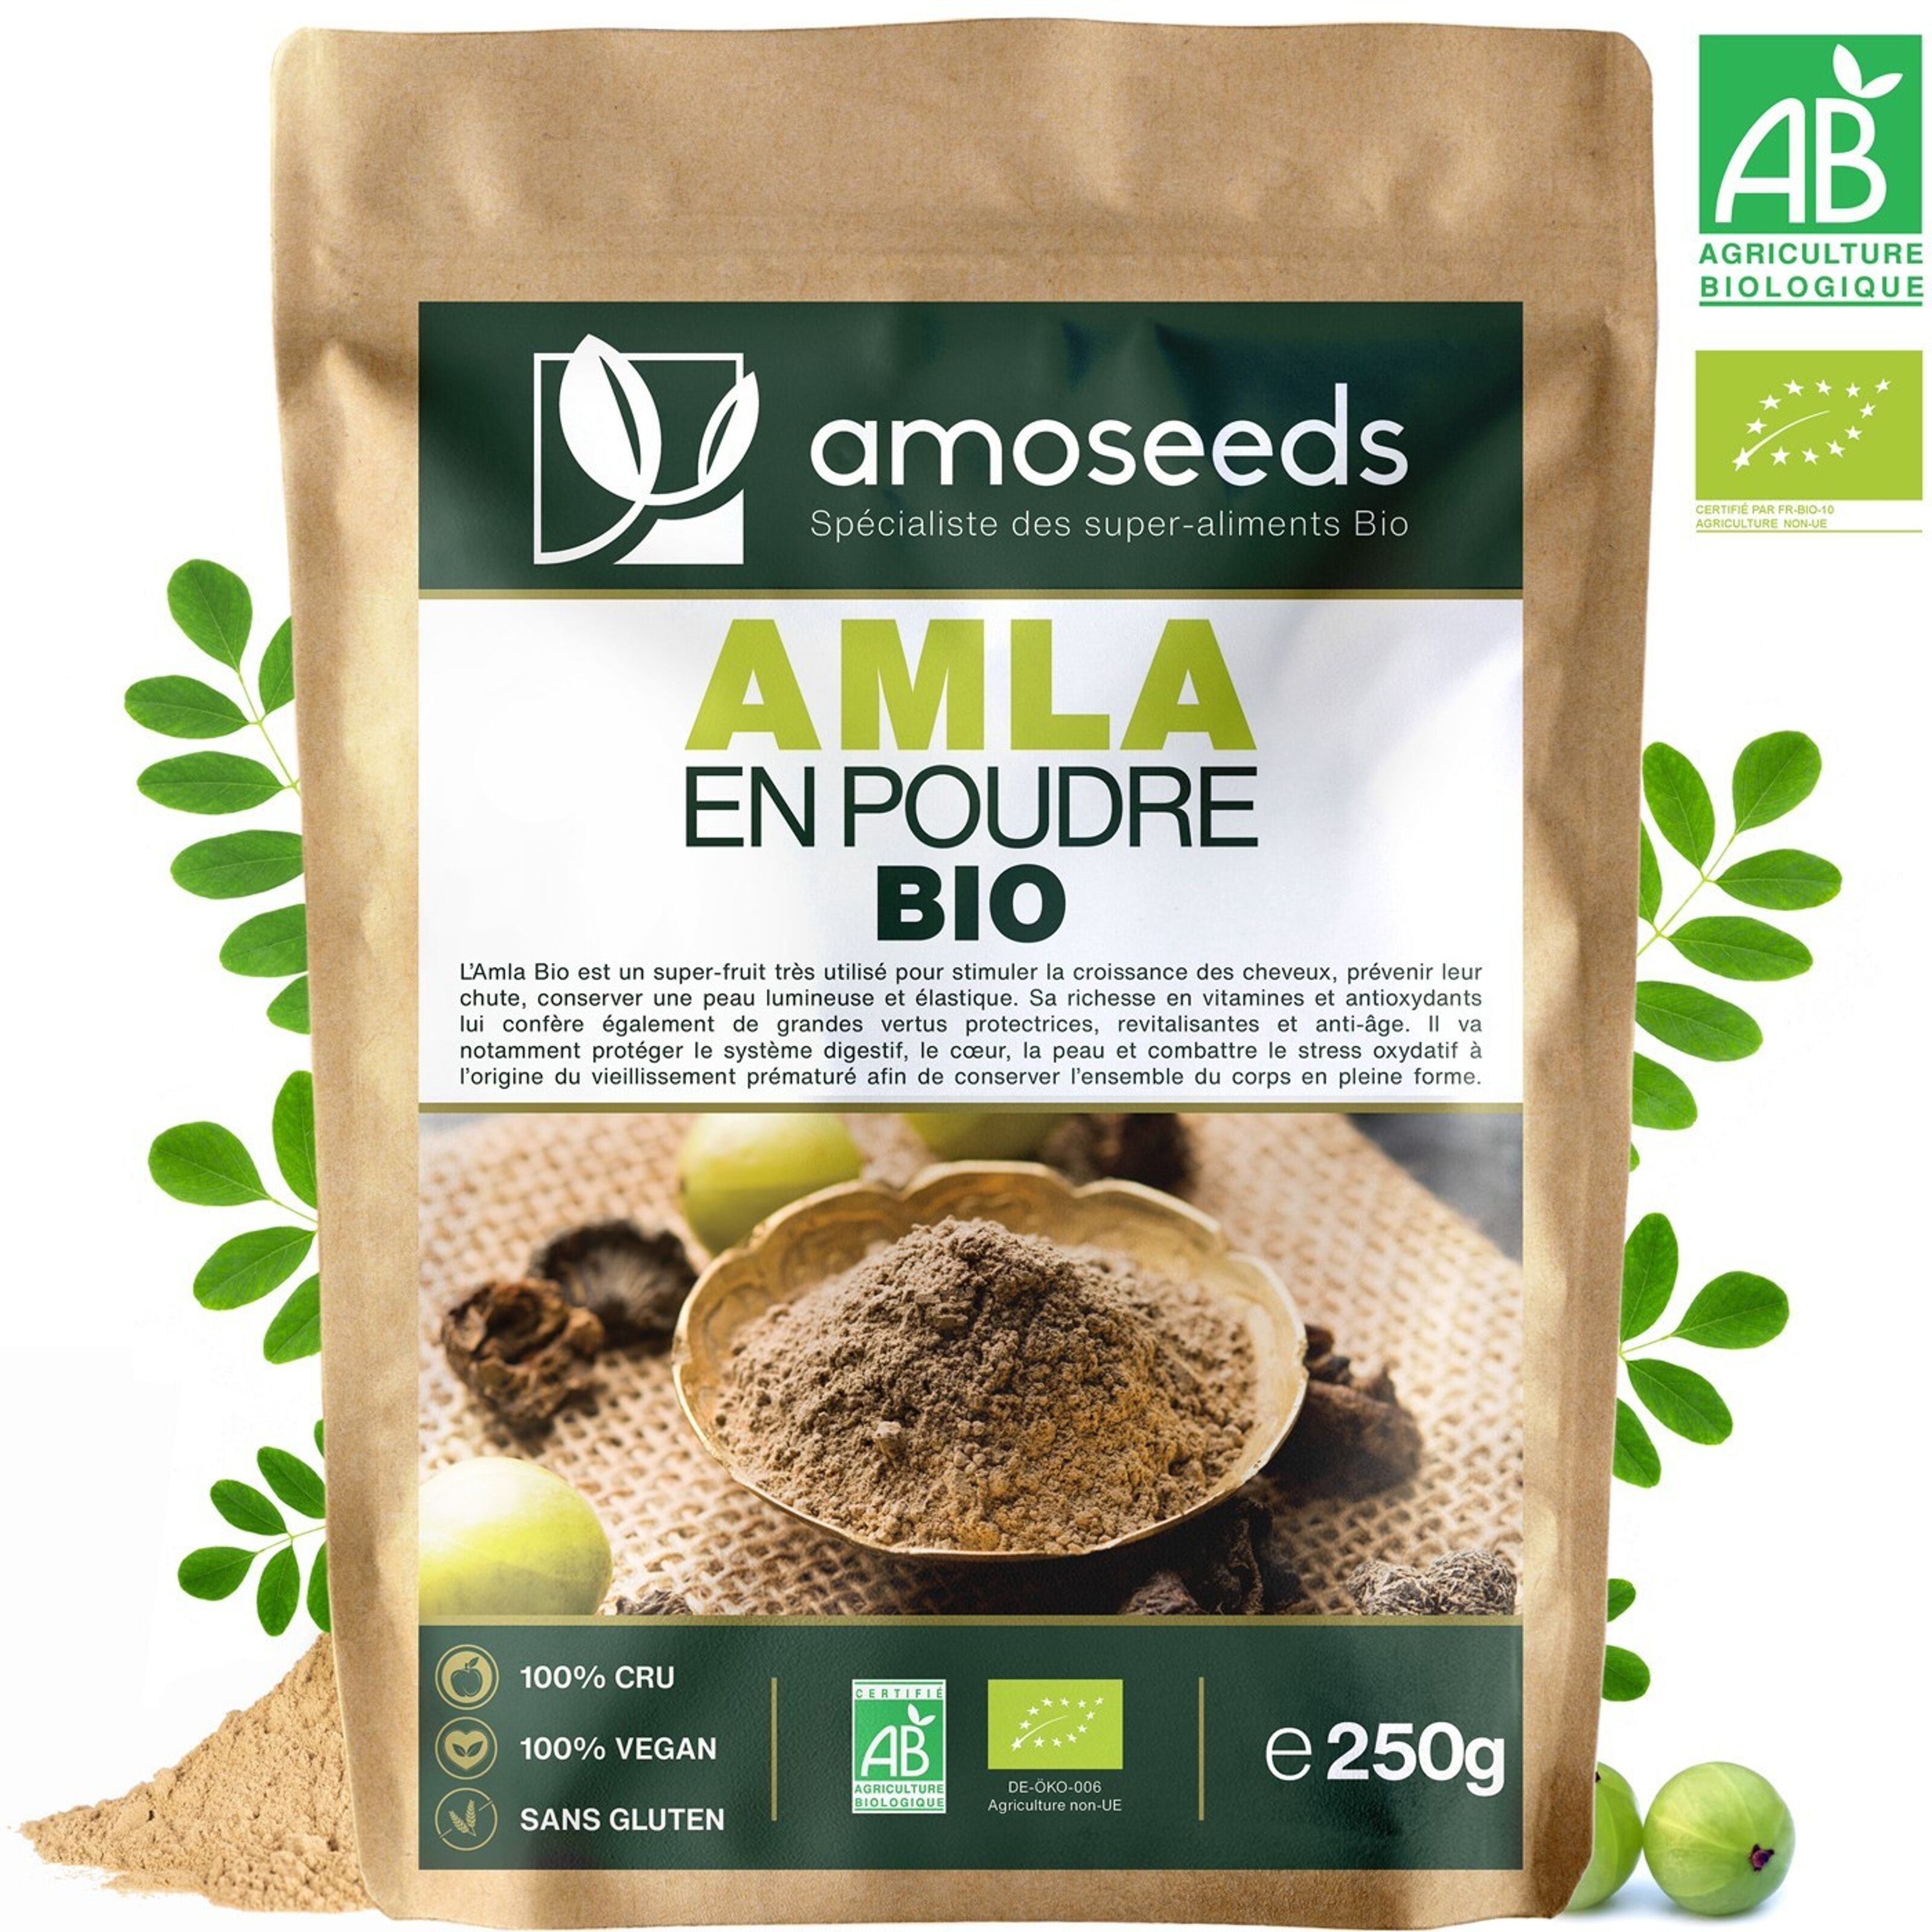 Buy wholesale Amla Powder Organic 250G